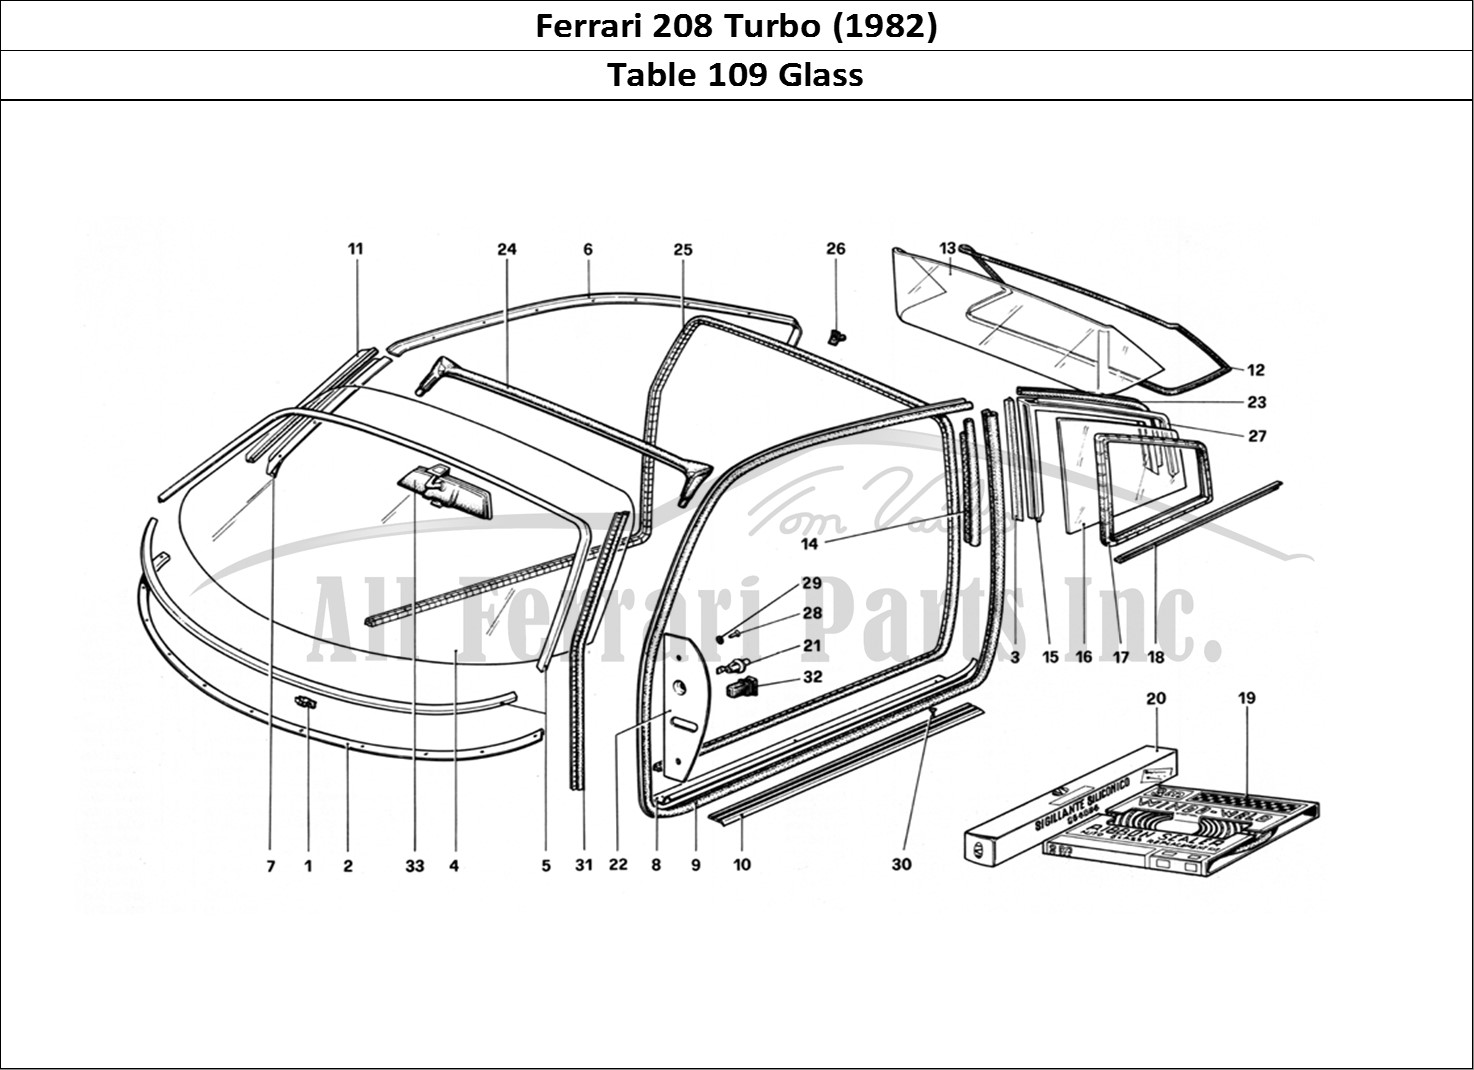 Ferrari Parts Ferrari 208 Turbo (1982) Page 109 Glasses